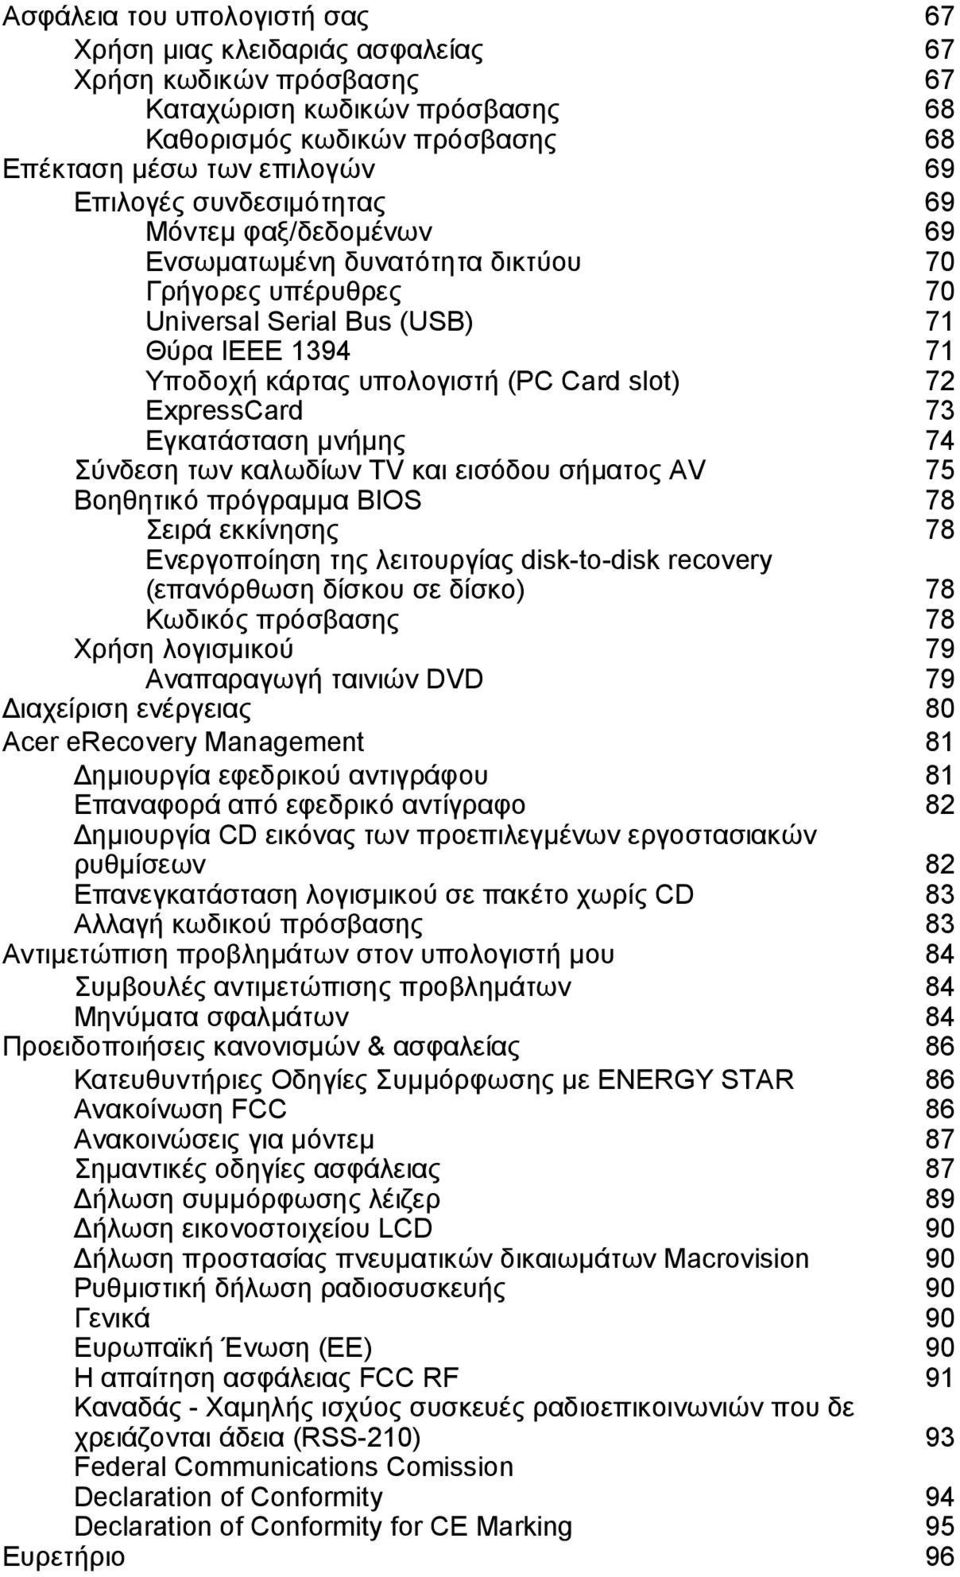 ExpressCard 73 Εγκατάσταση µνήµης 74 Σύνδεση των καλωδίων TV και εισόδου σήµατος AV 75 Βοηθητικό πρόγραµµα BIOS 78 Σειρά εκκίνησης 78 Ενεργοποίηση της λειτουργίας disk-to-disk recovery (επανόρθωση